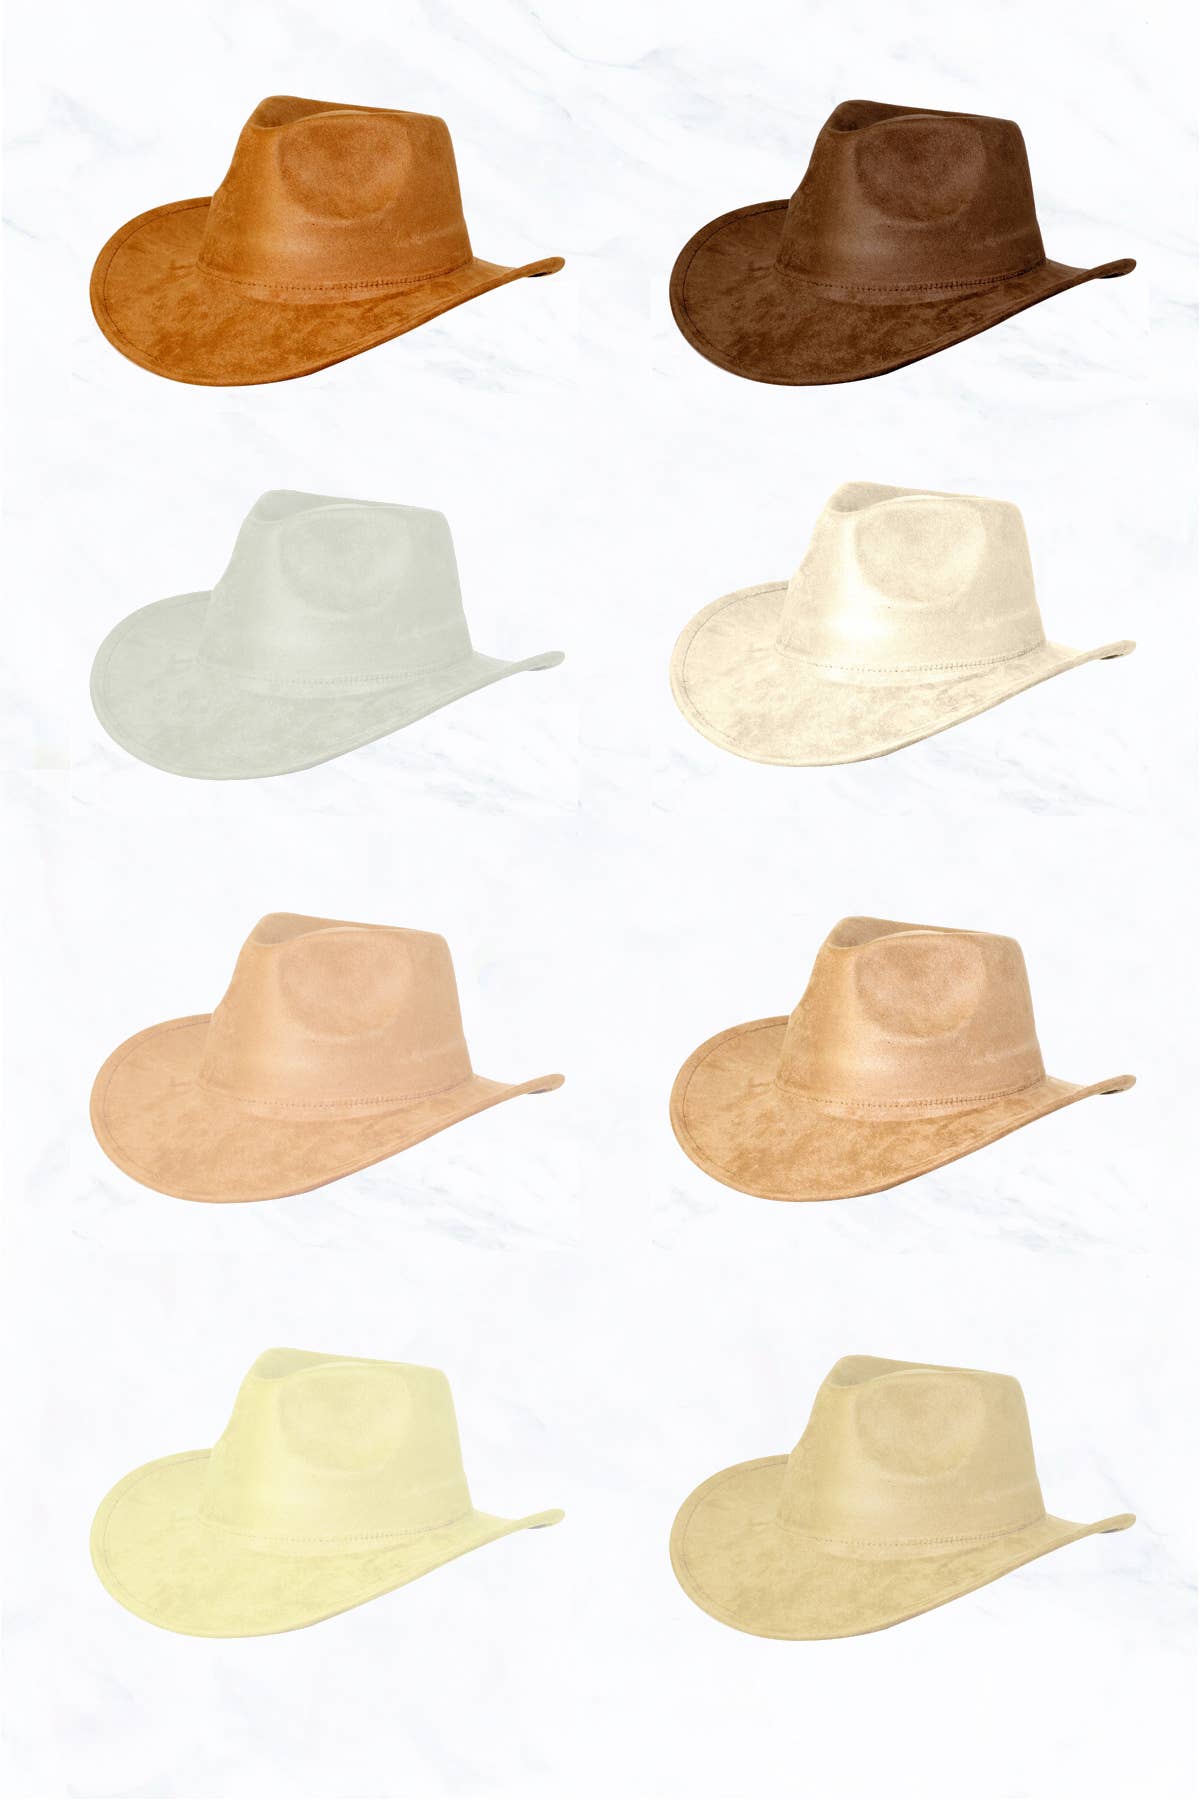 Suzie Q USA - Suede Regular Cowboy Fedora Hat: Camel